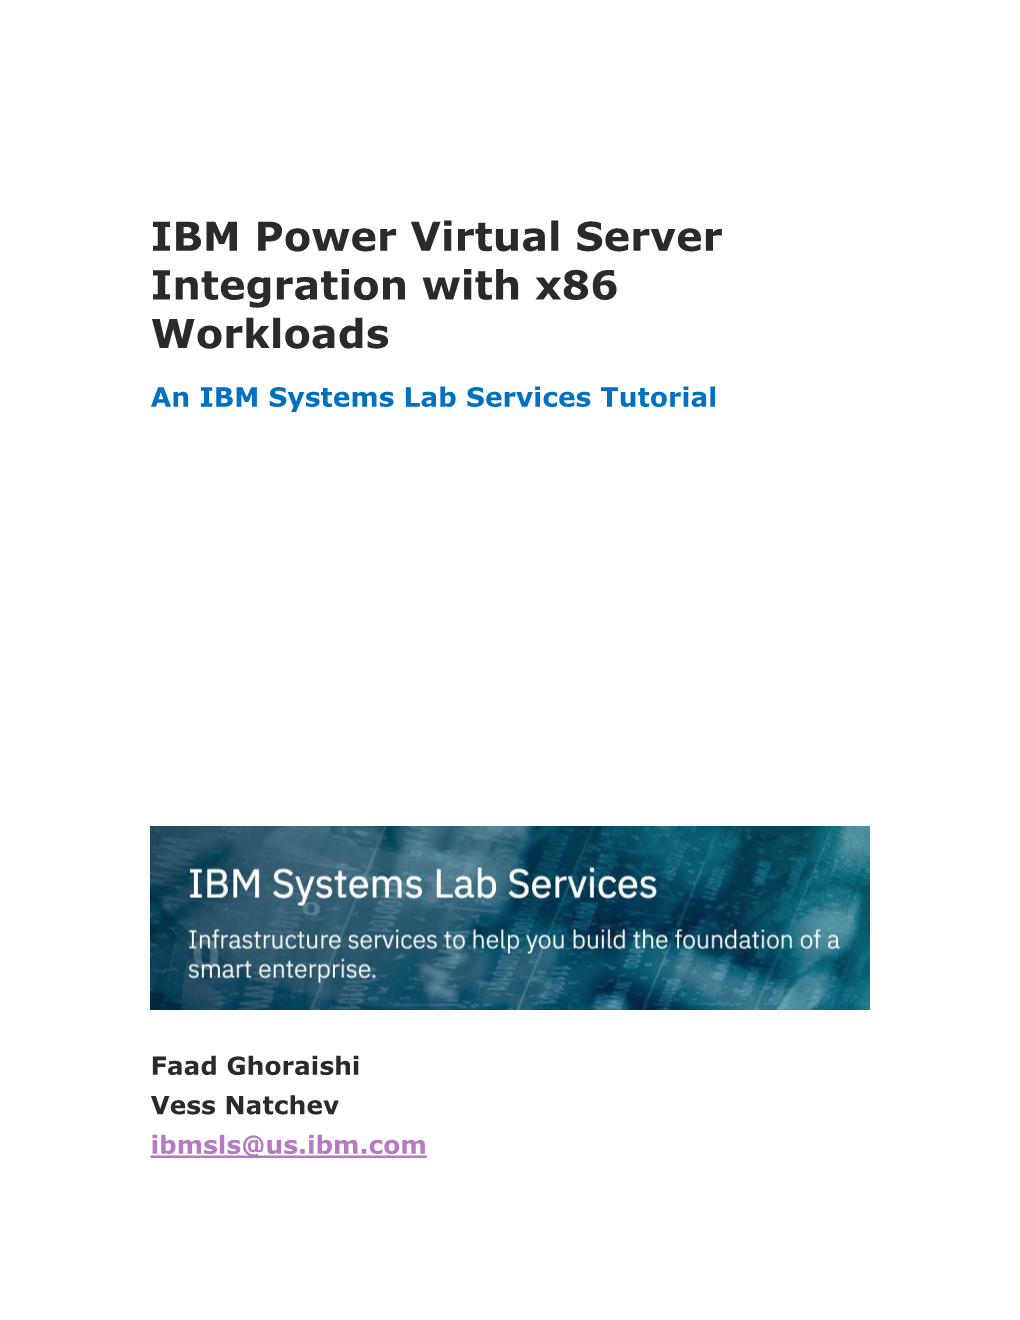 IBM Power Virtual Server Integration with X86 Workloads